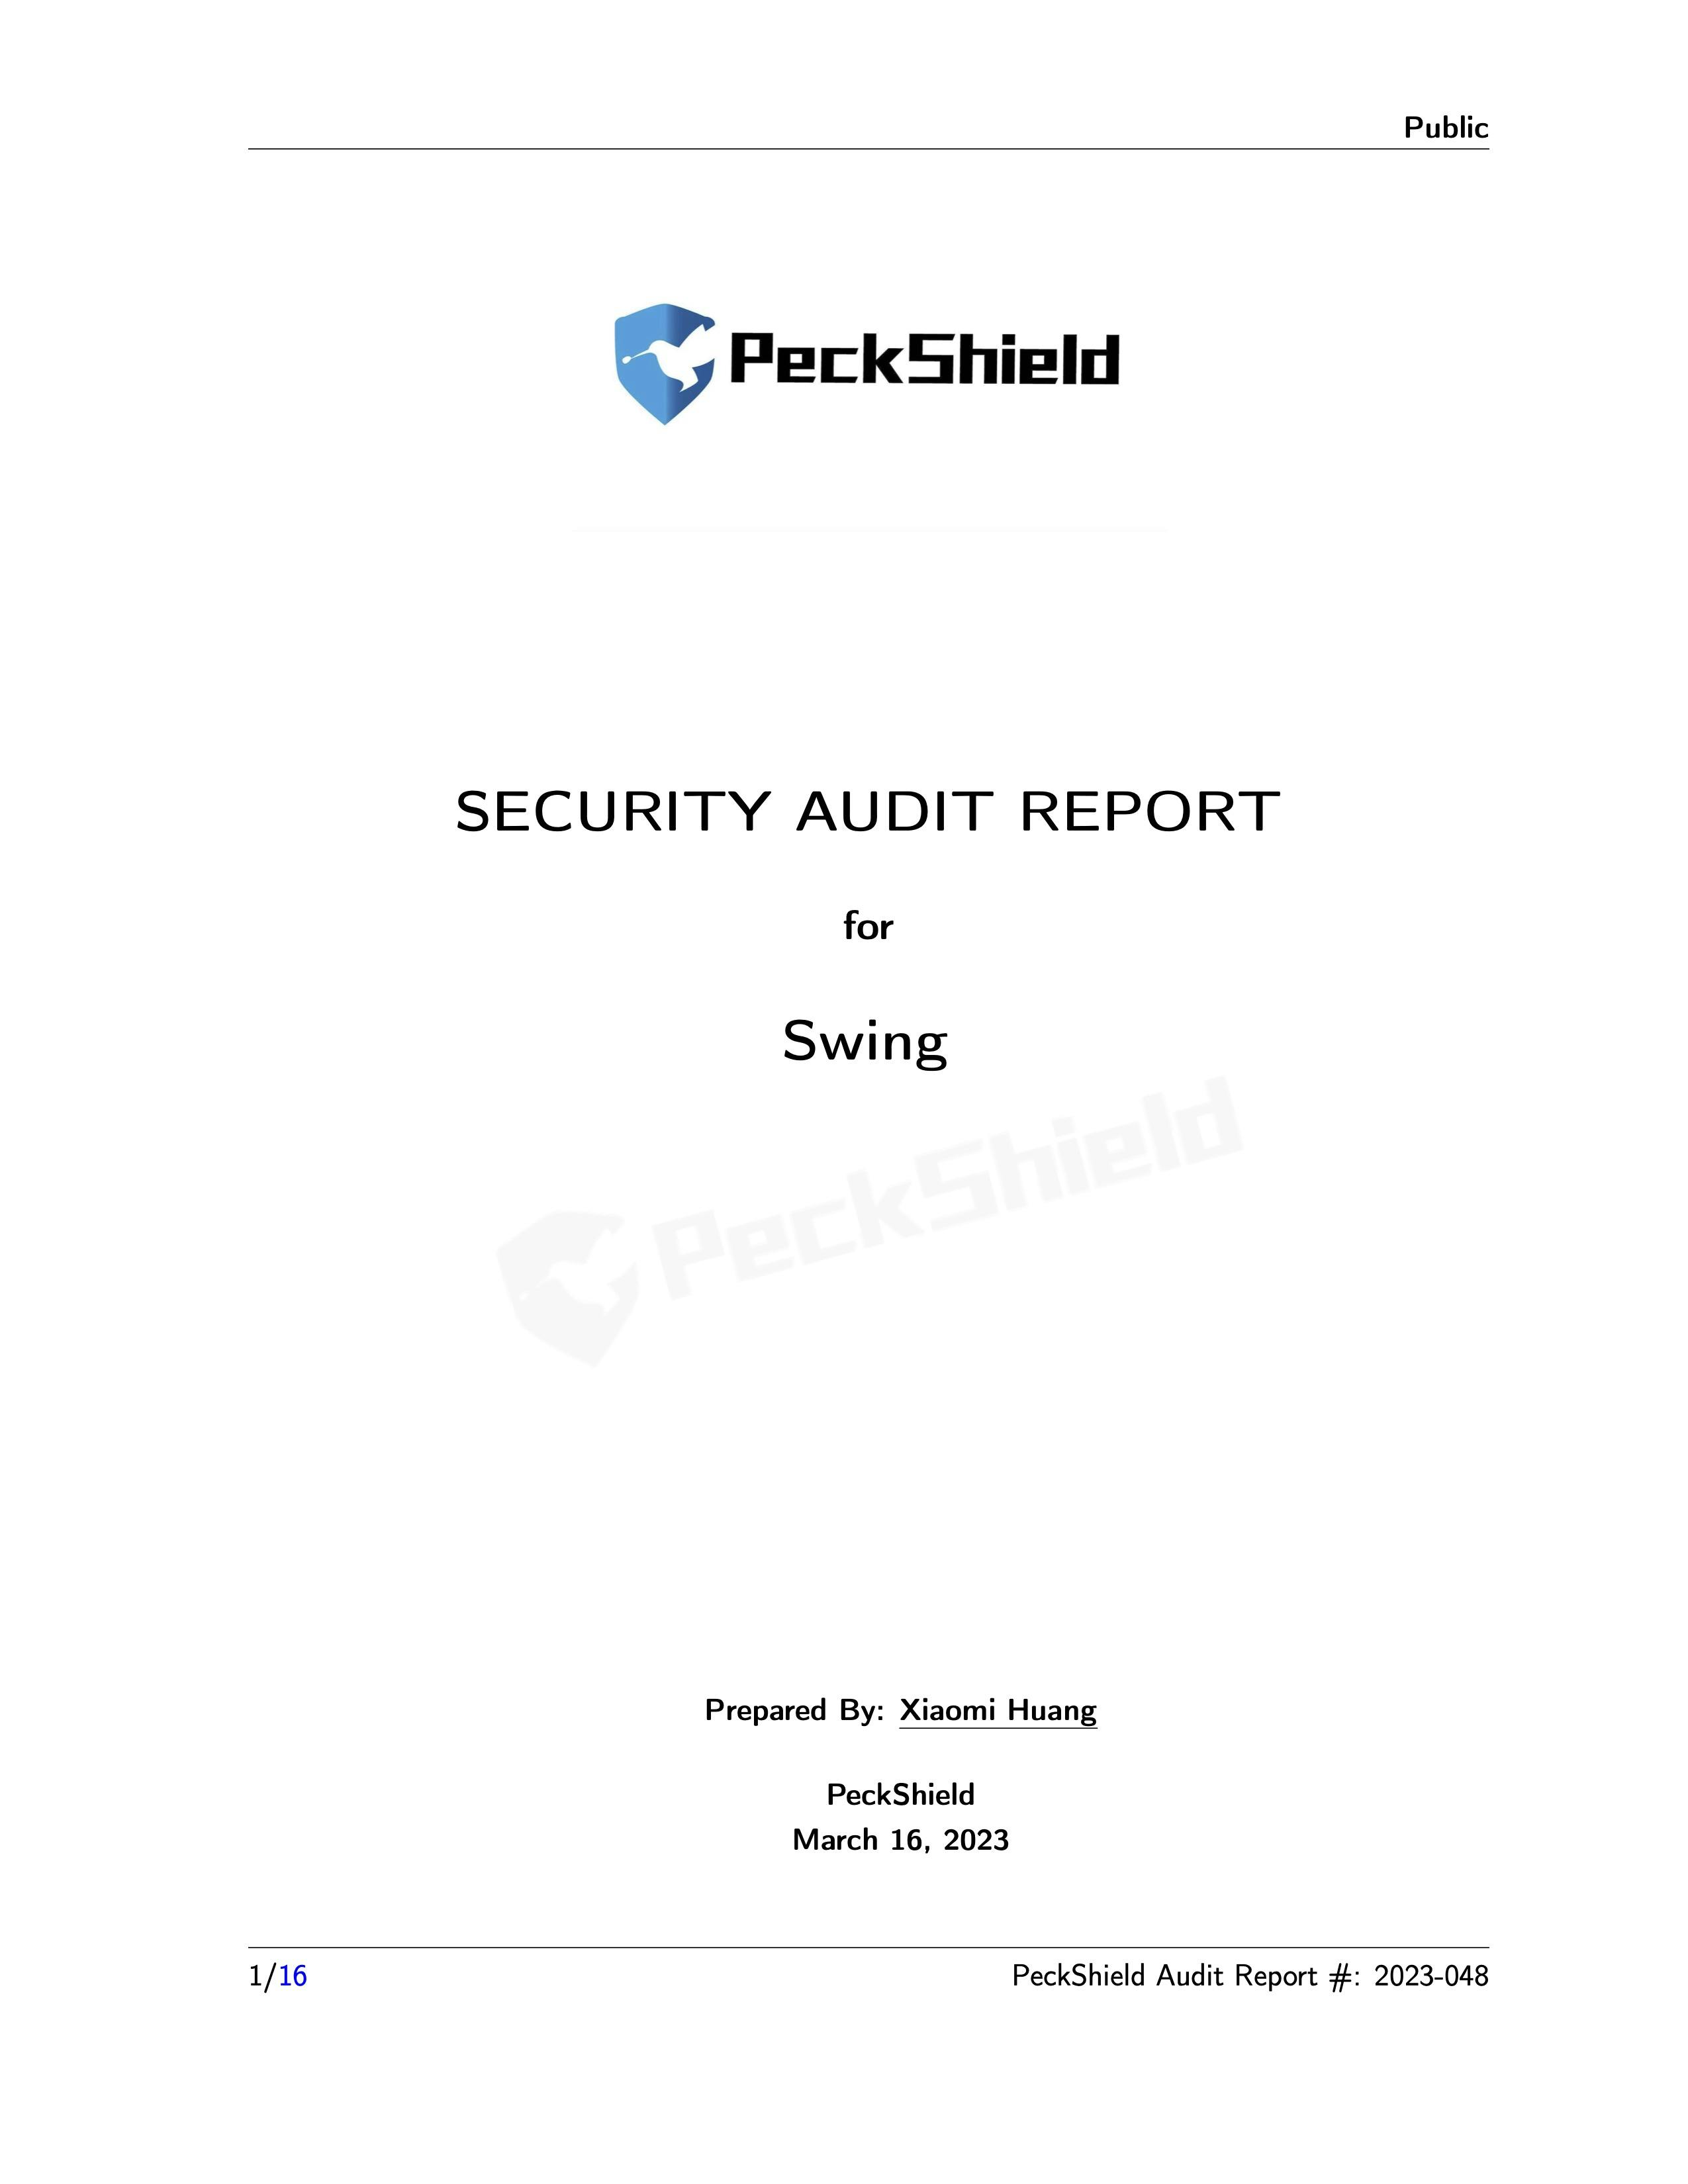 PeckShield Audit Report 1